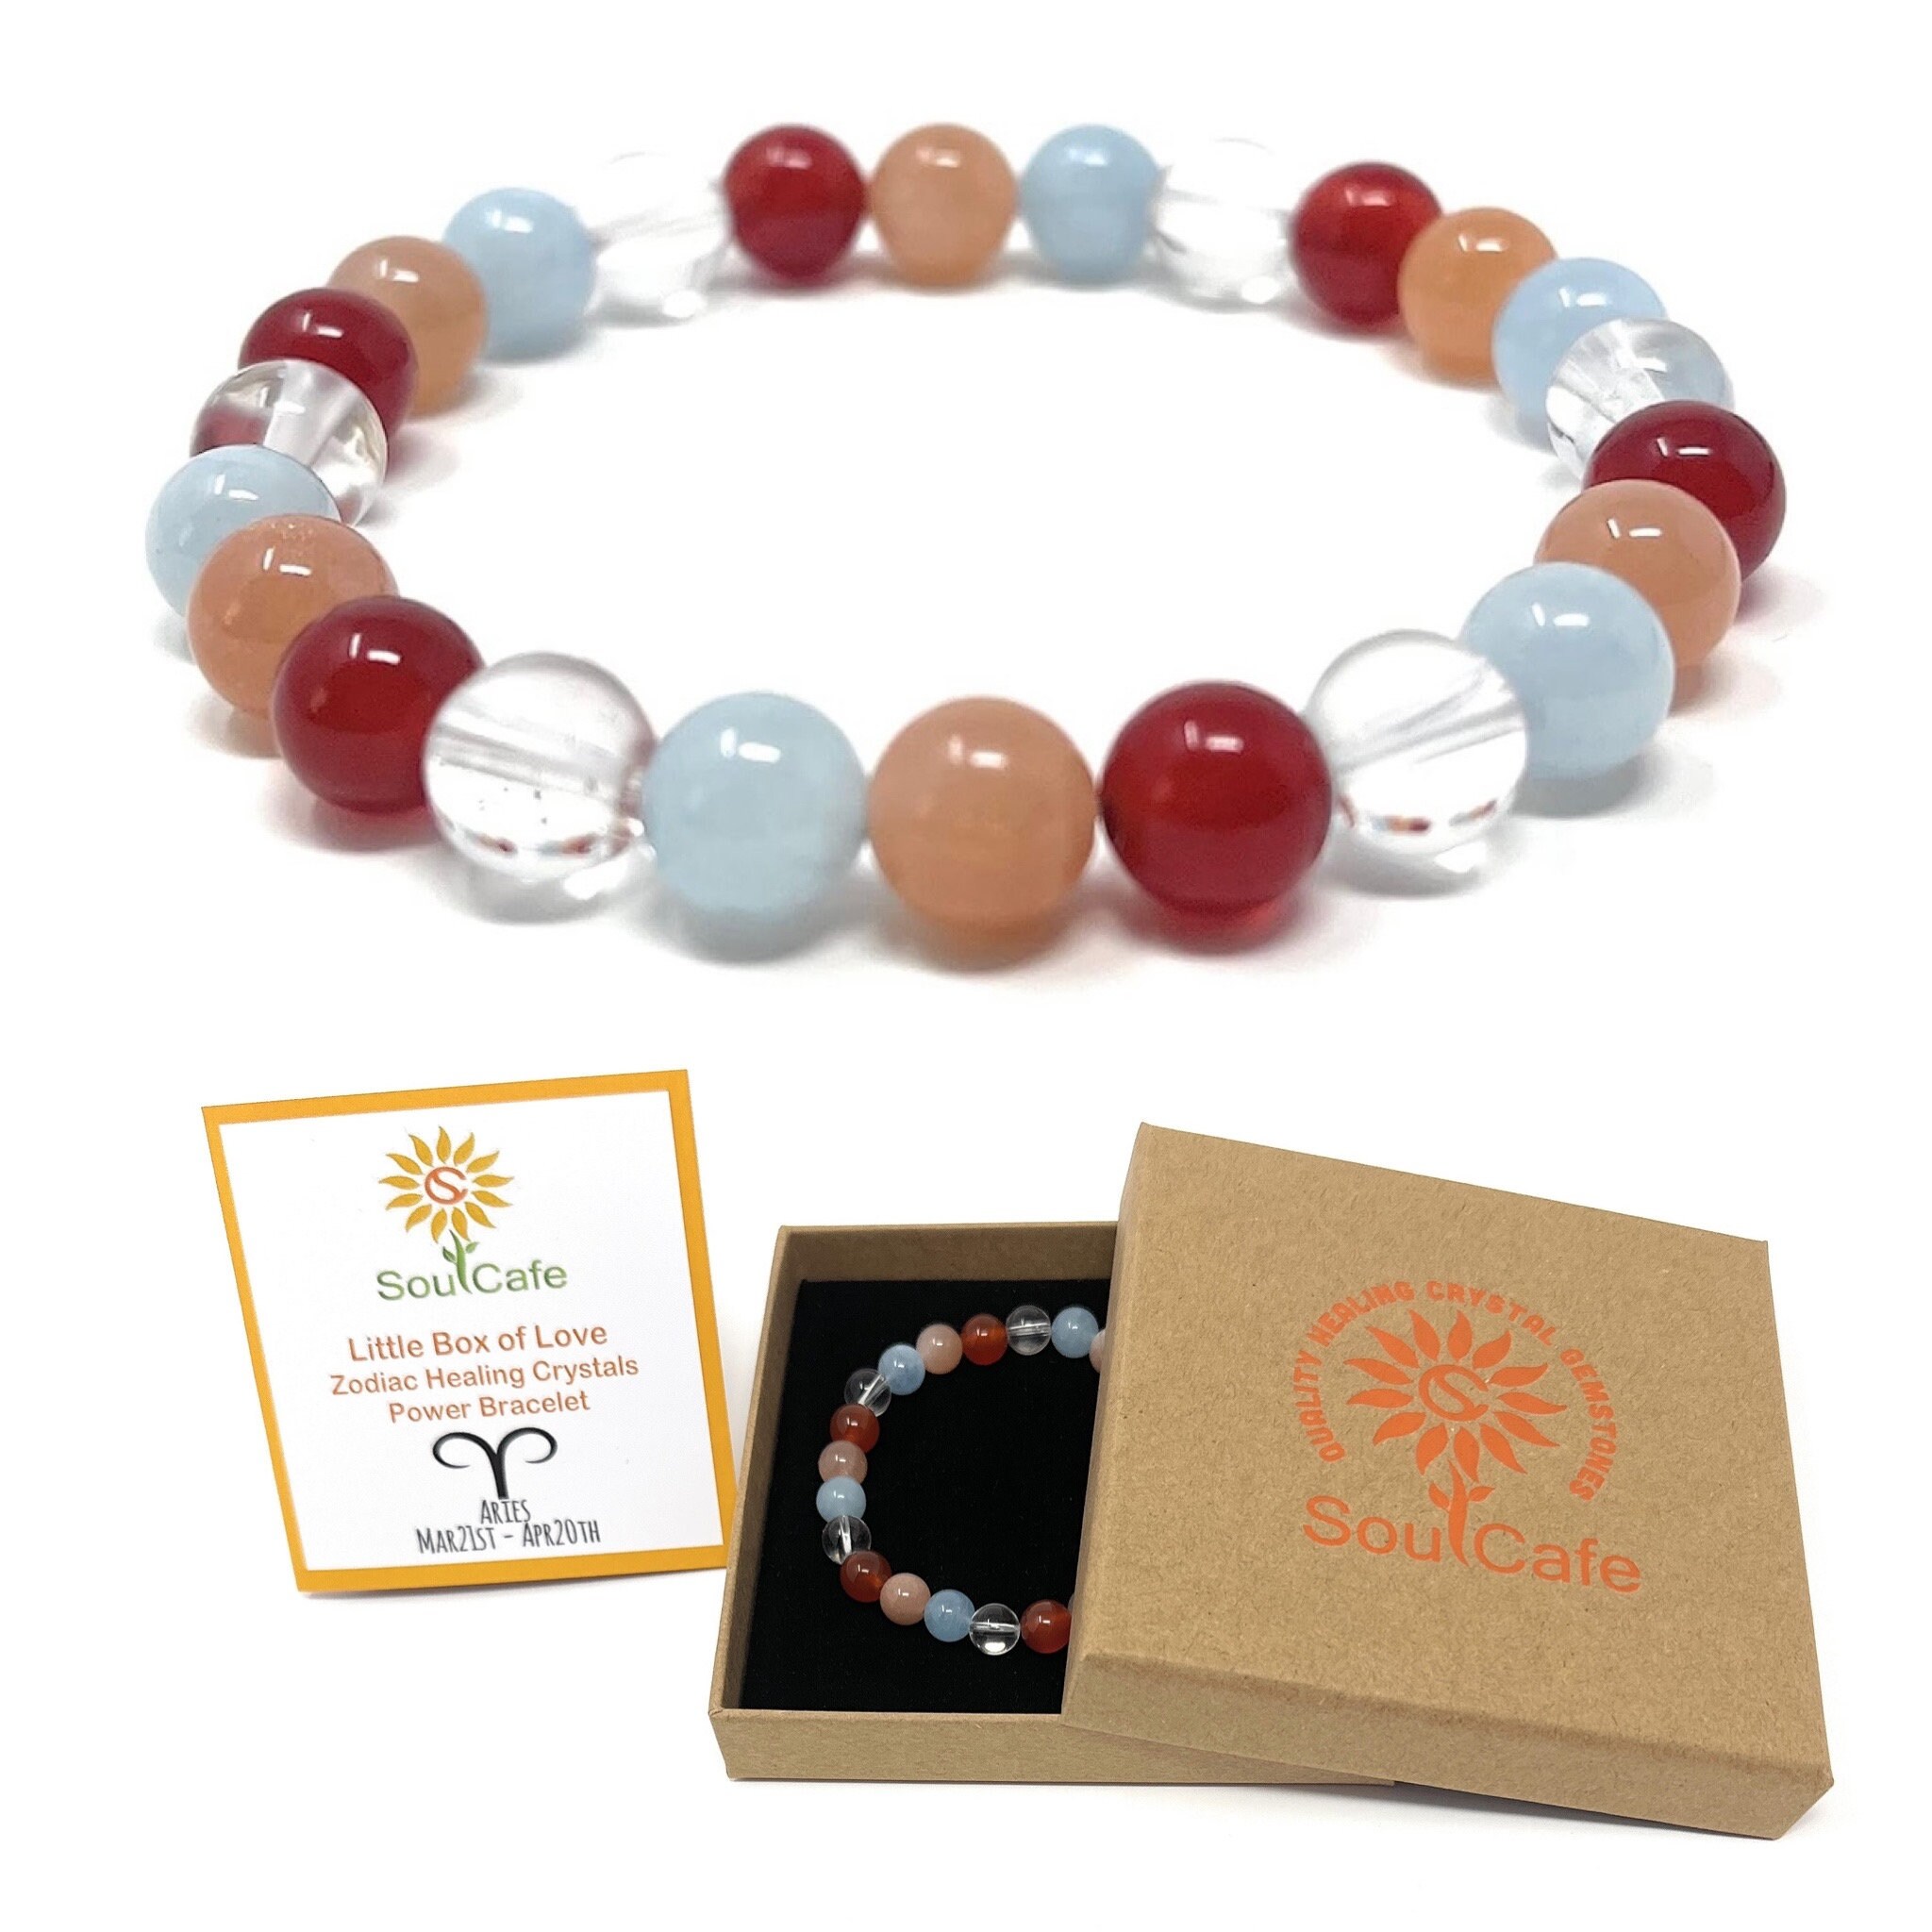 Zodiac Crystal Bracelets 8mm Gemstone Bead Bracelets Choose Your Sign  Healing Birthstone Bracelet) Gift Box And Gift Card - AliExpress